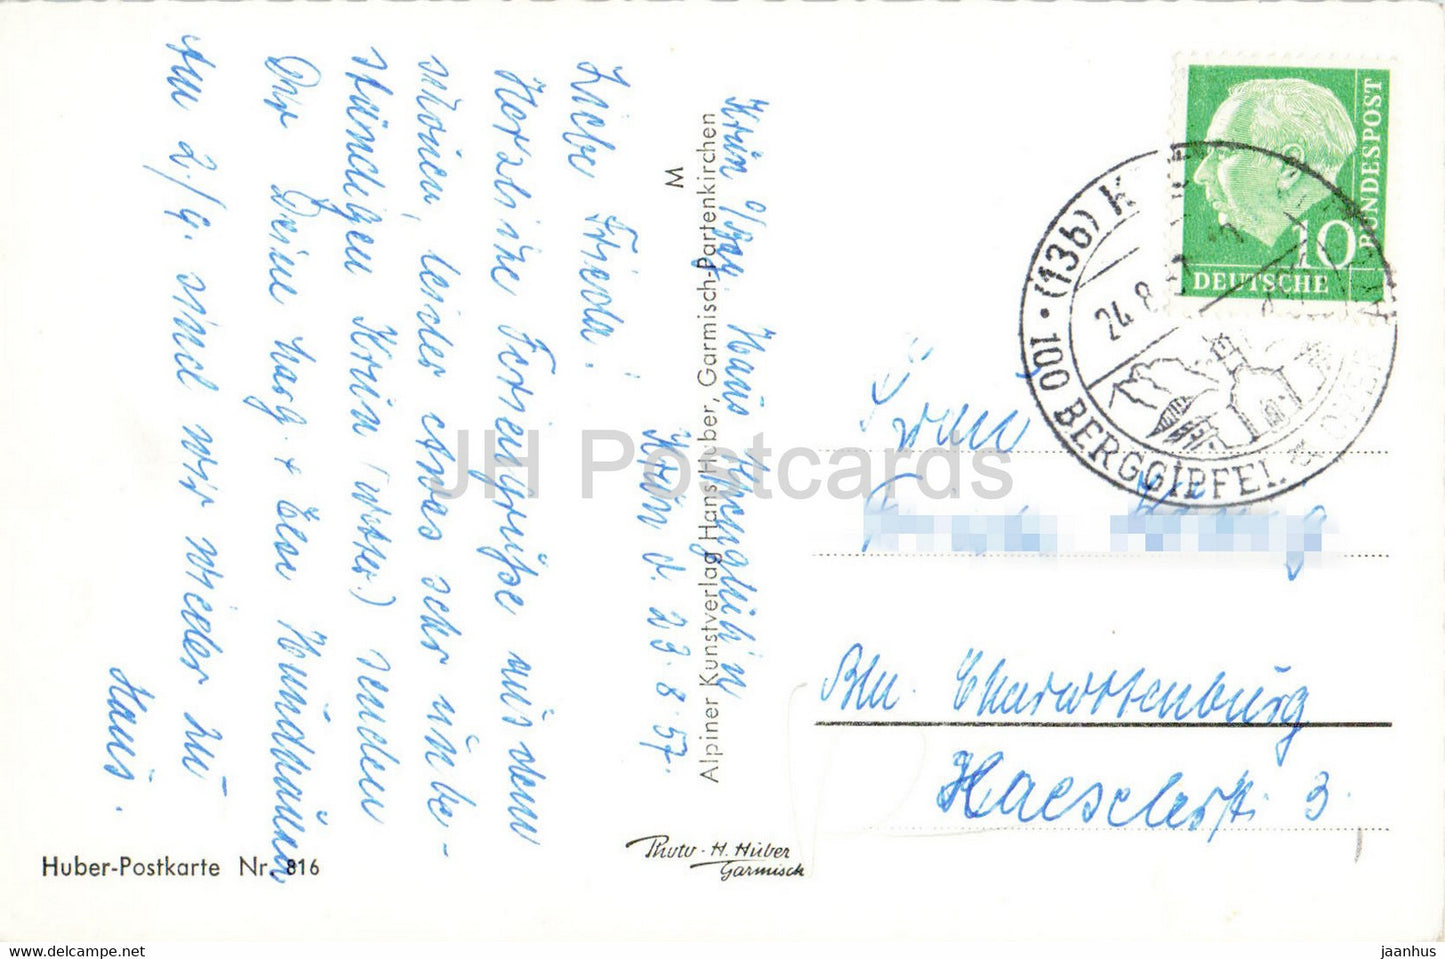 Krun gegen Zugspitzgruppe 2964 m - carte postale ancienne - 1957 - Allemagne - utilisé